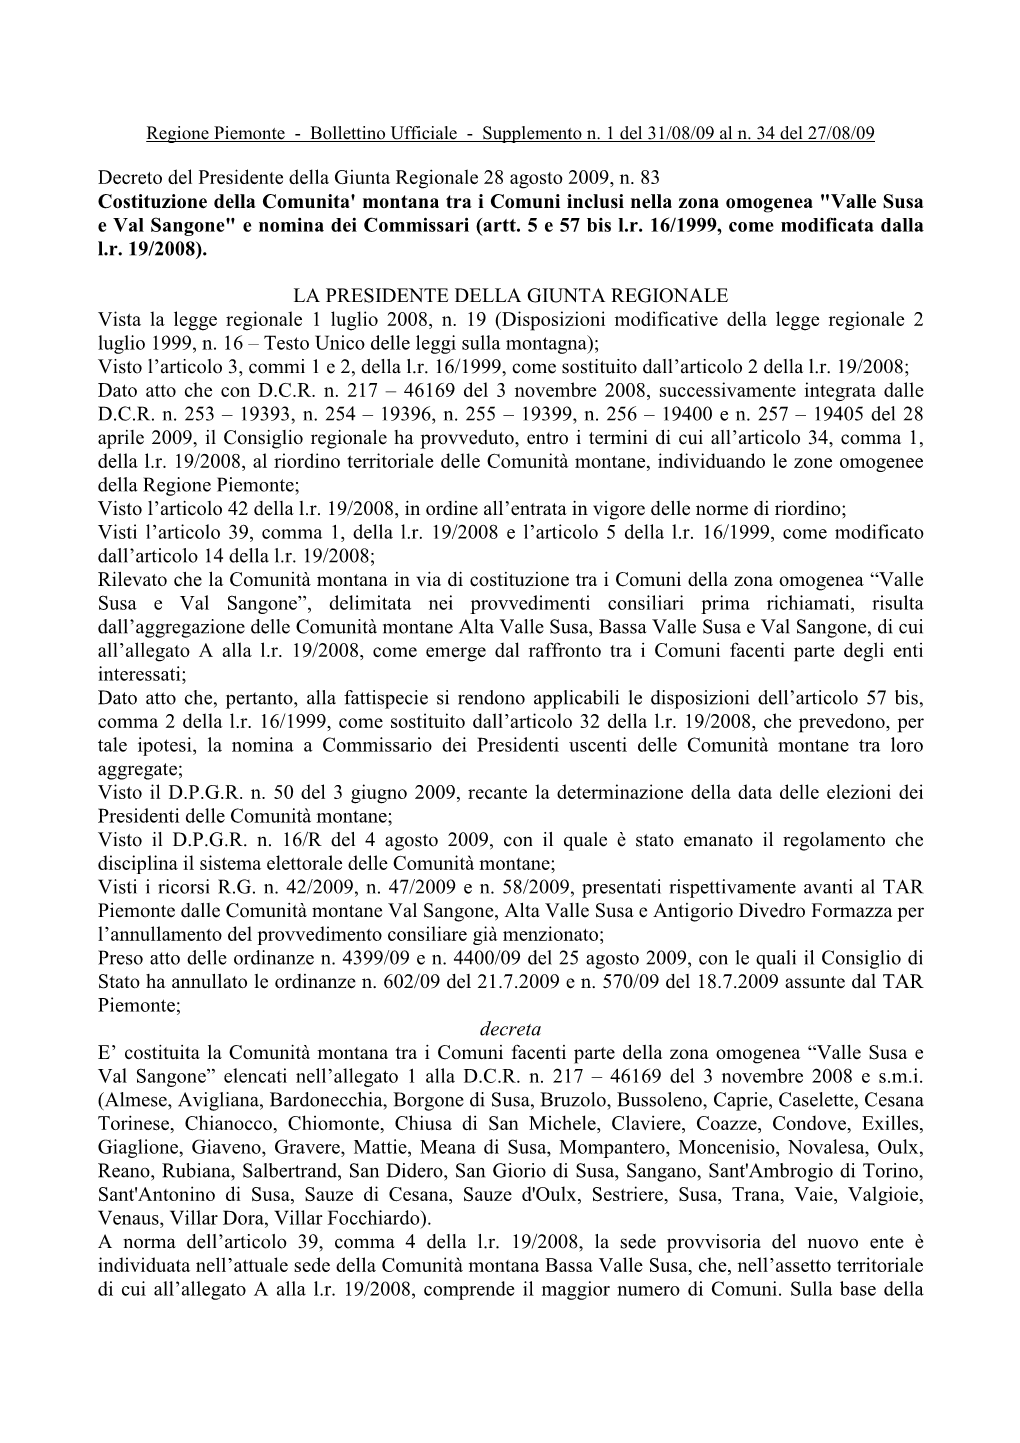 Decreto Del Presidente Della Giunta Regionale 28 Agosto 2009, N. 83